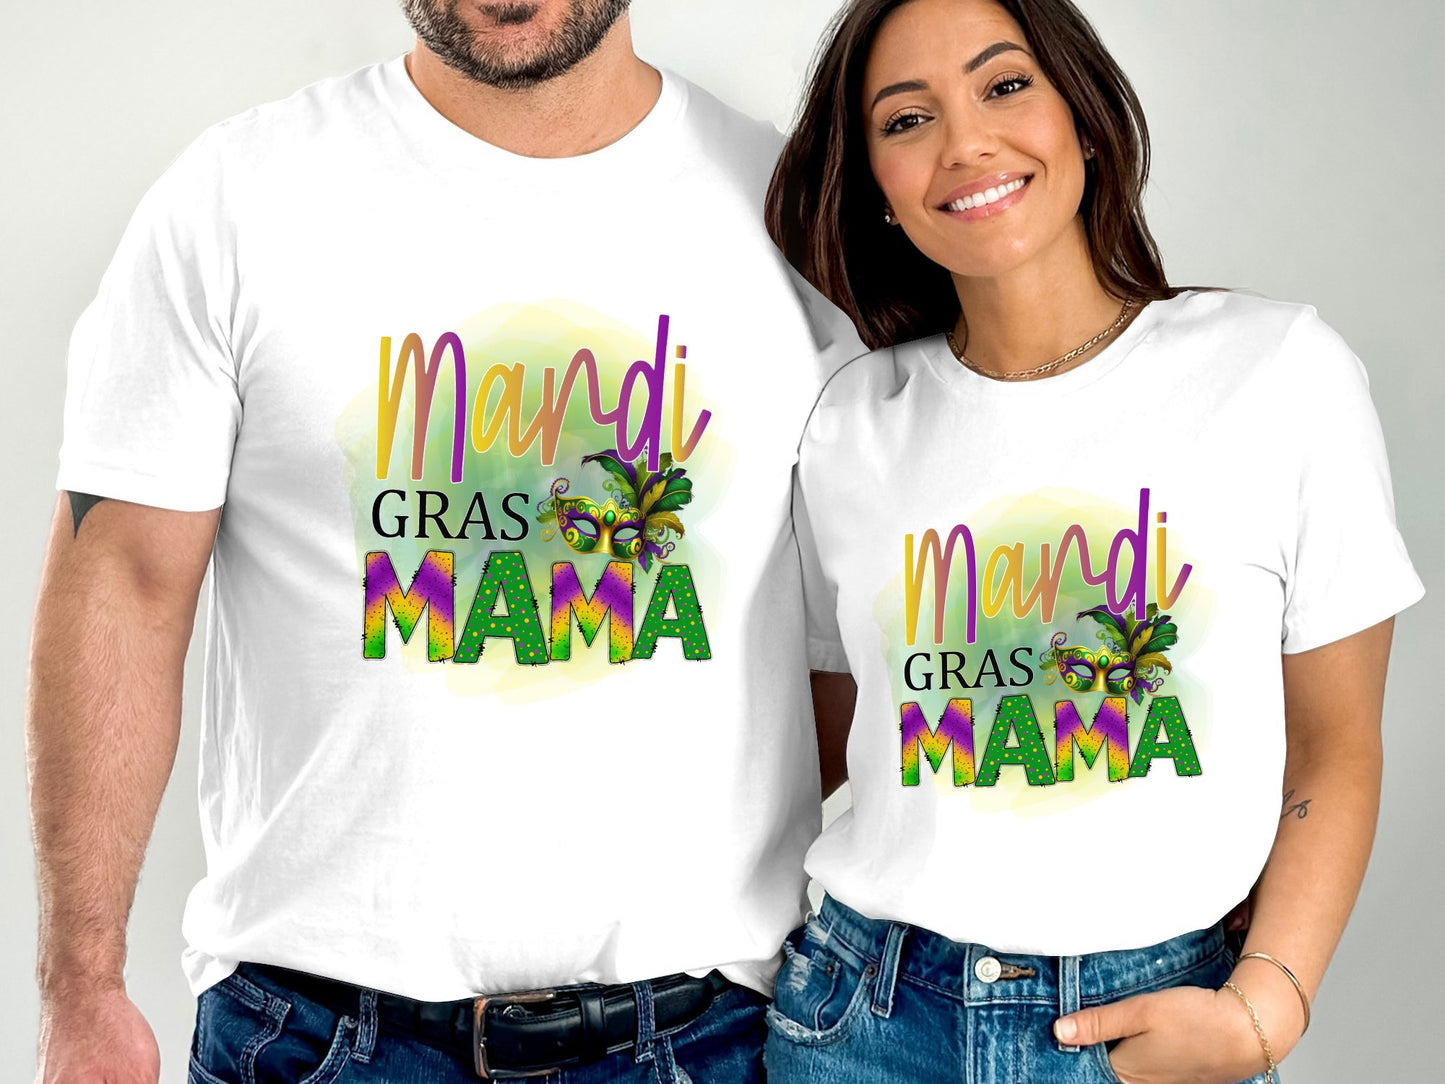 Mardi Gras MaMa T-shirt